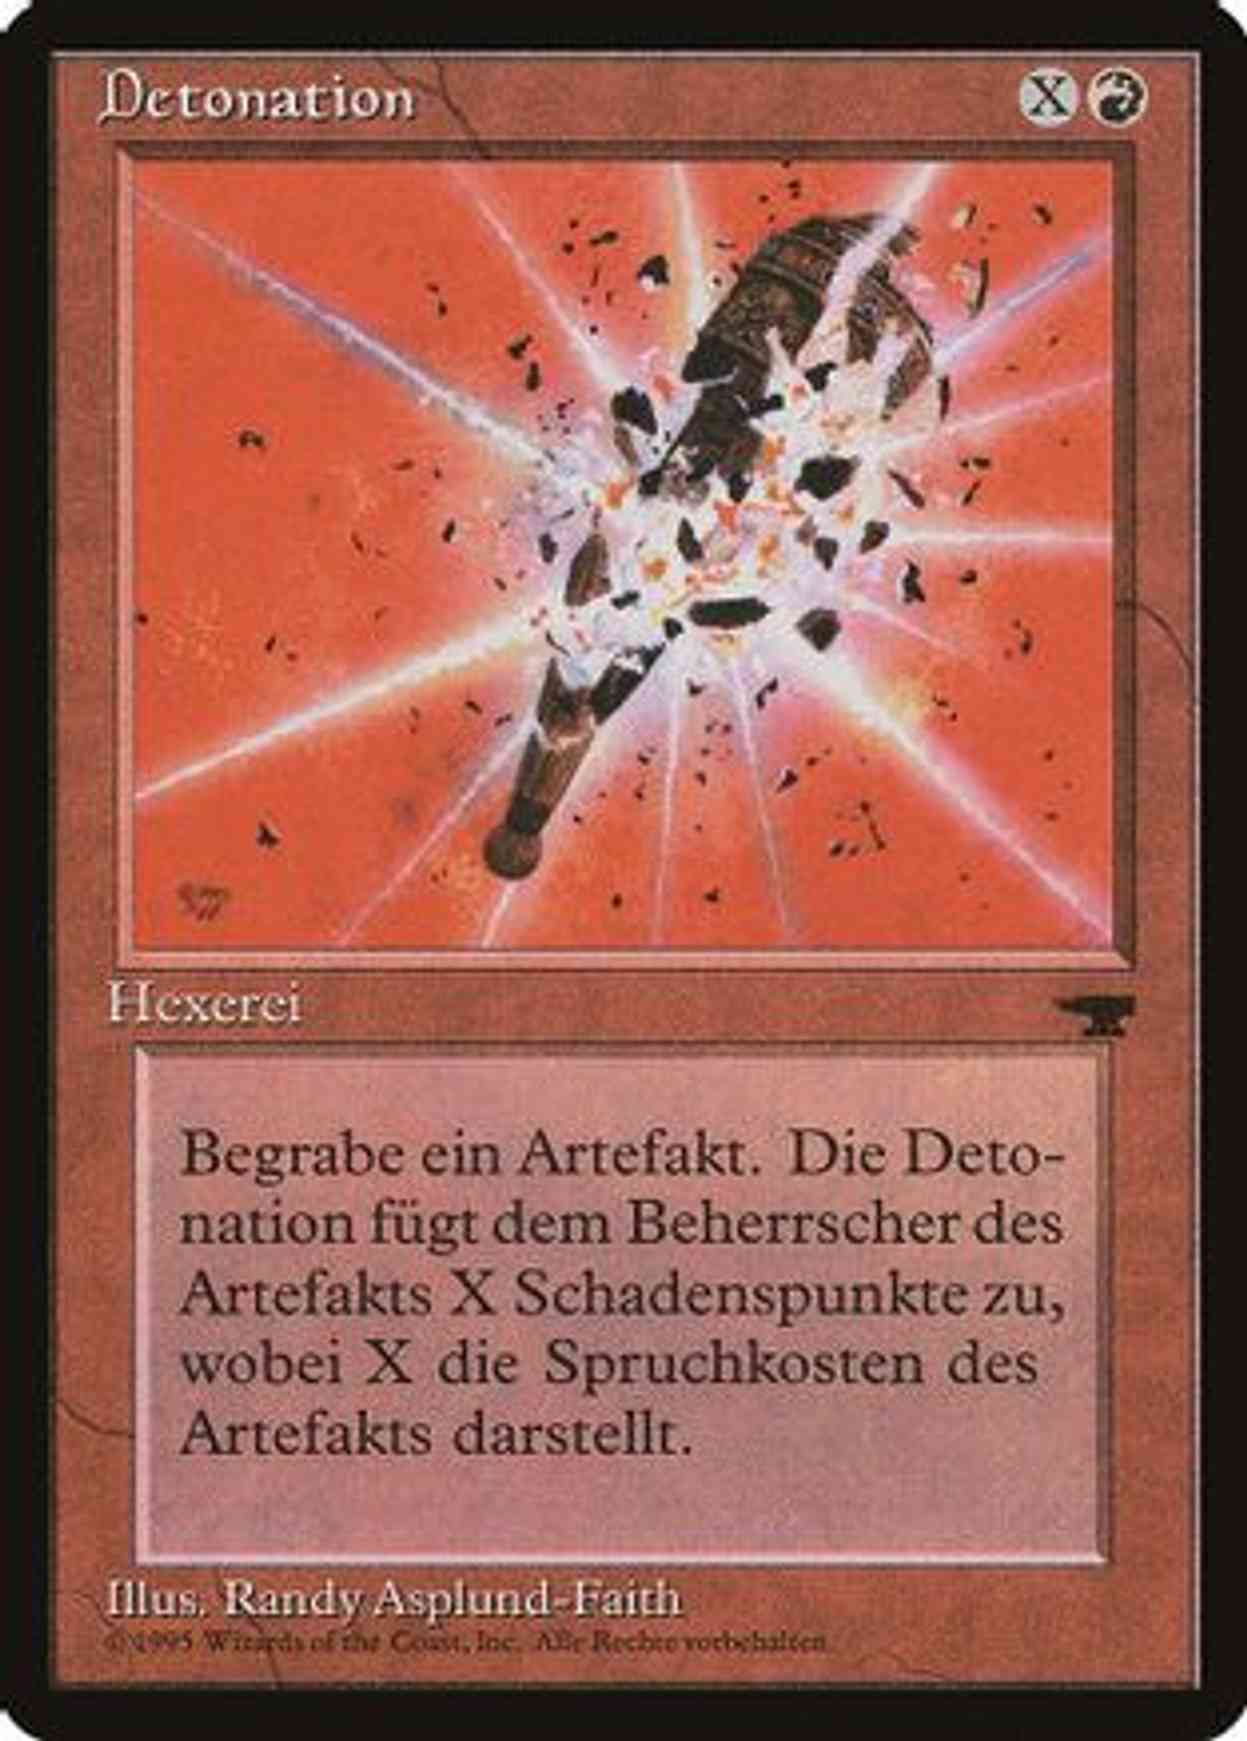 Detonate (German) - "Detonation" magic card front